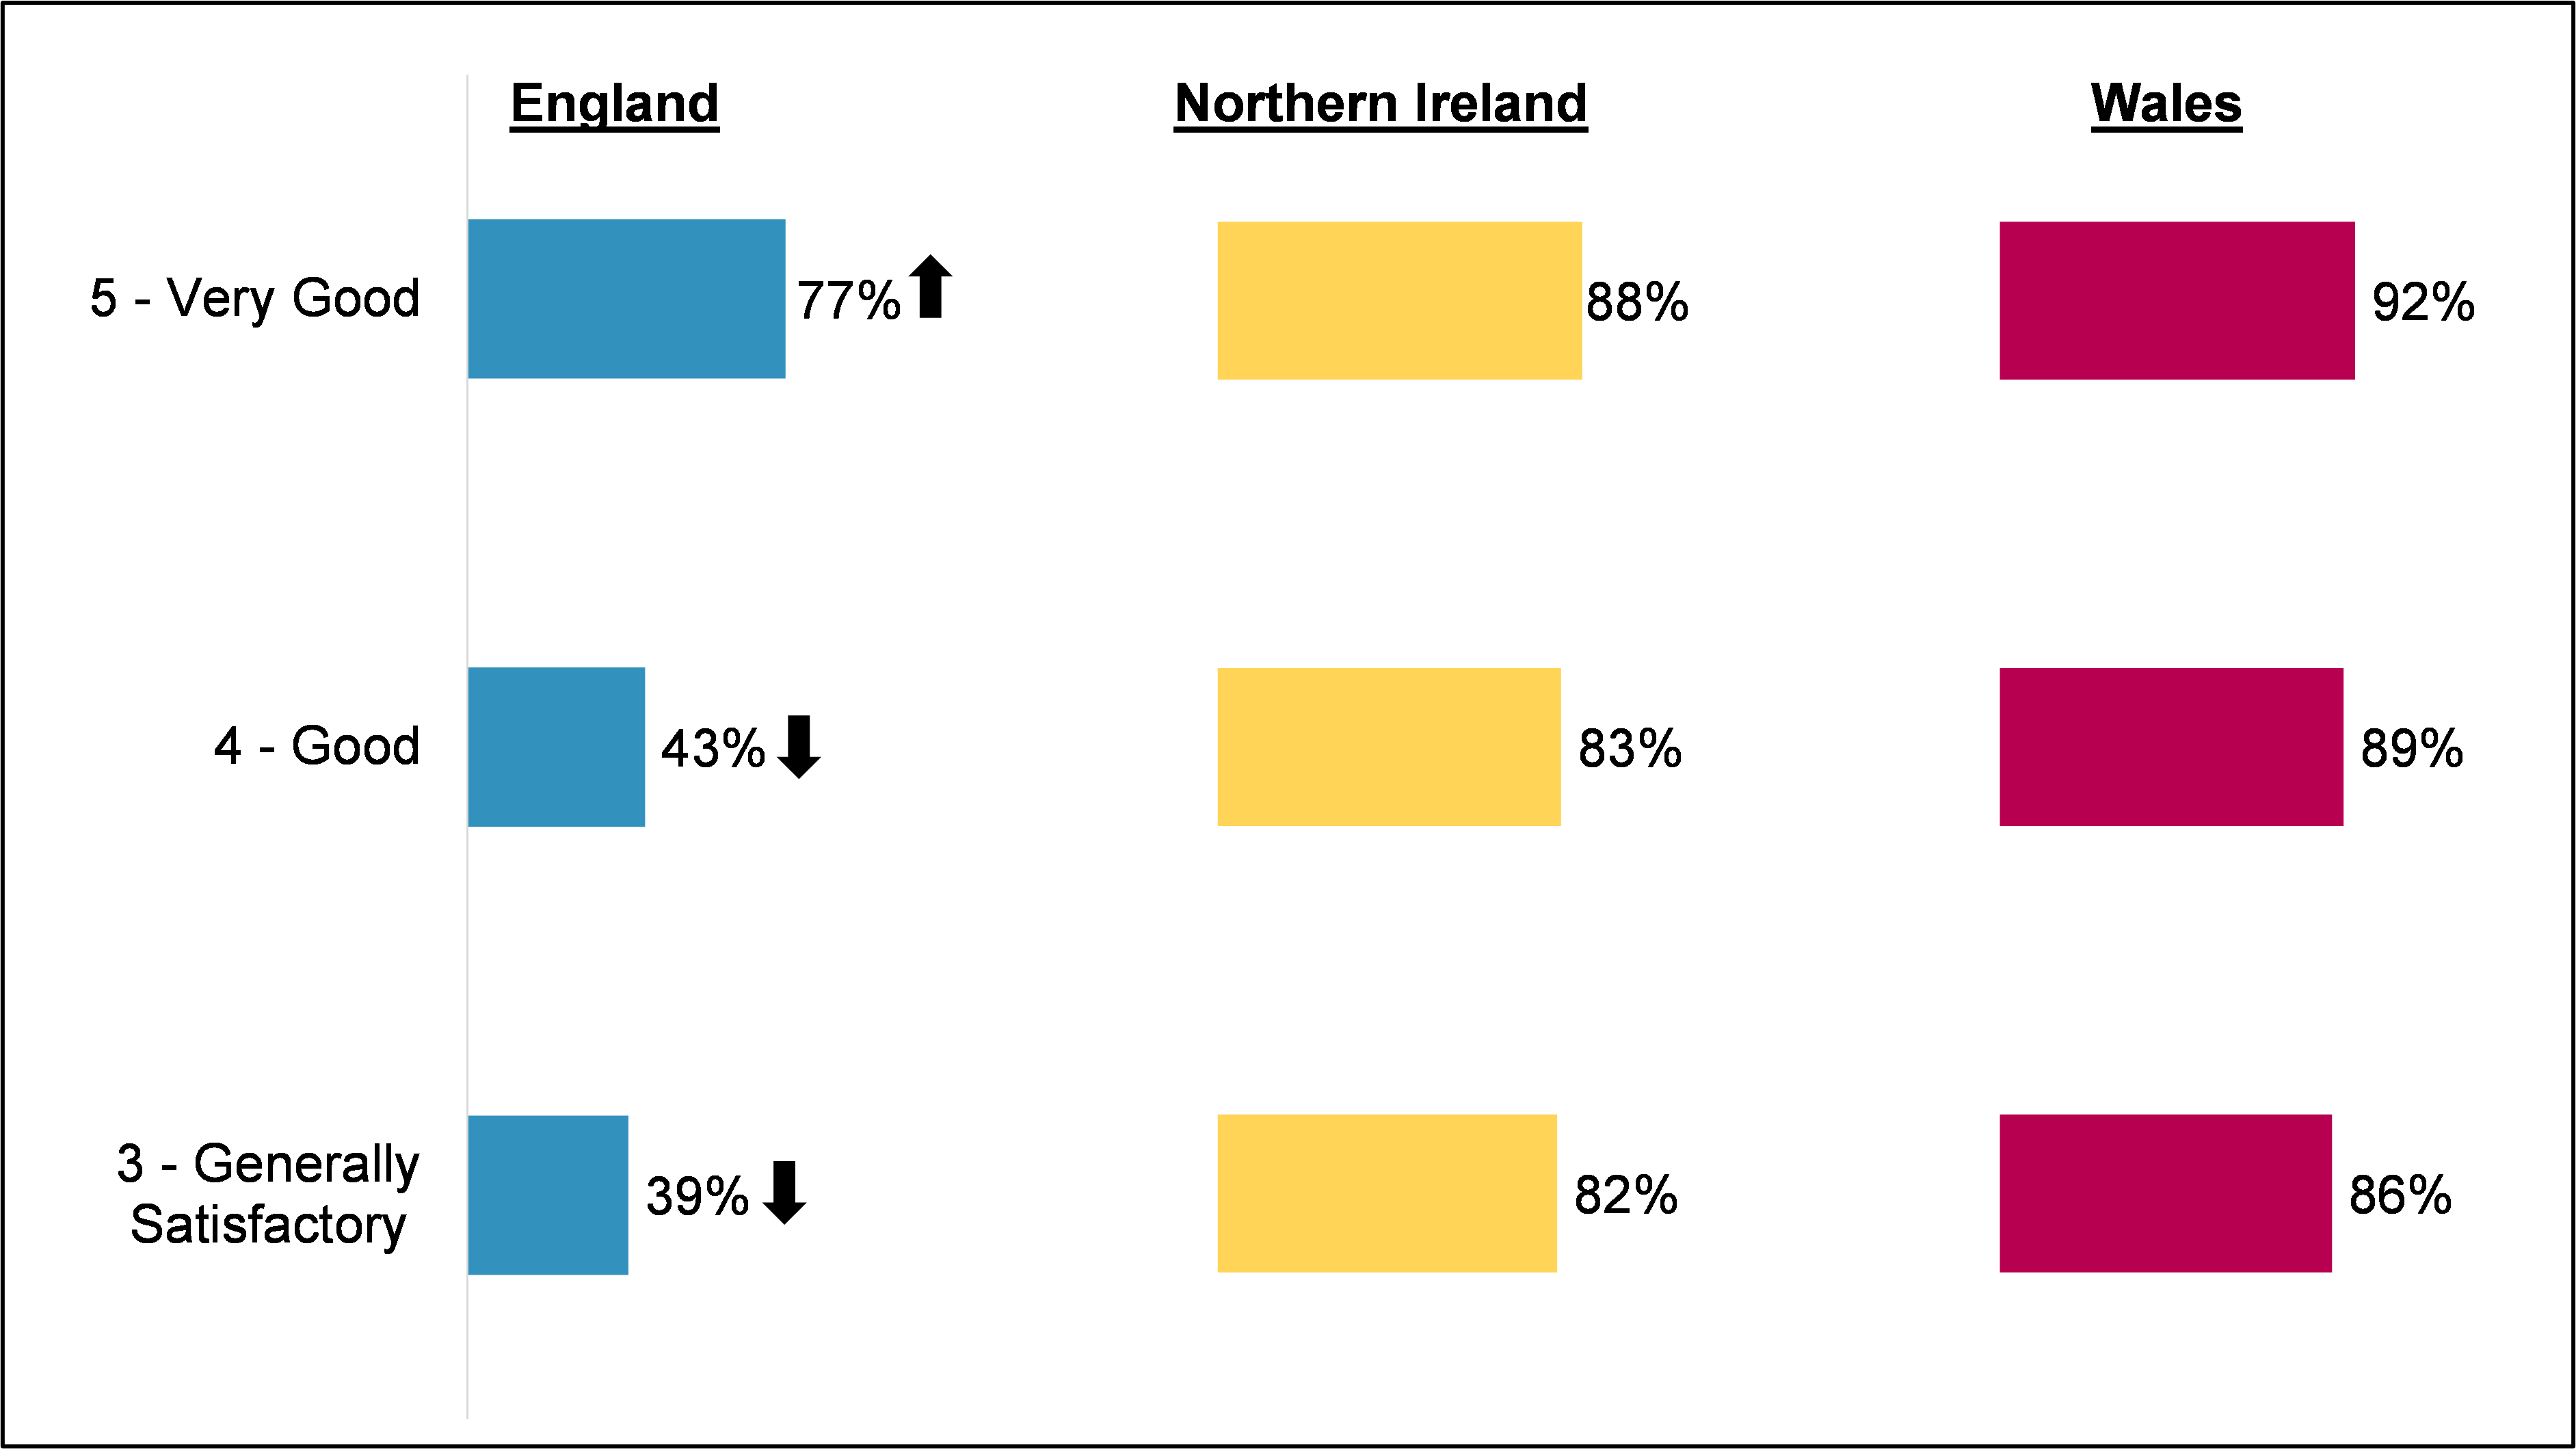 England: Very Good (5): 77%, Good(4): 43%, Generally Satisfactory(3): 39%  Northern Ireland: Very Good (5): 88%, Good(4): 83%, Generally Satisfactory(3): 82%  Wales: Very Good (5): 92%, Good(4): 89%, Generally Satisfactory(3): 86%